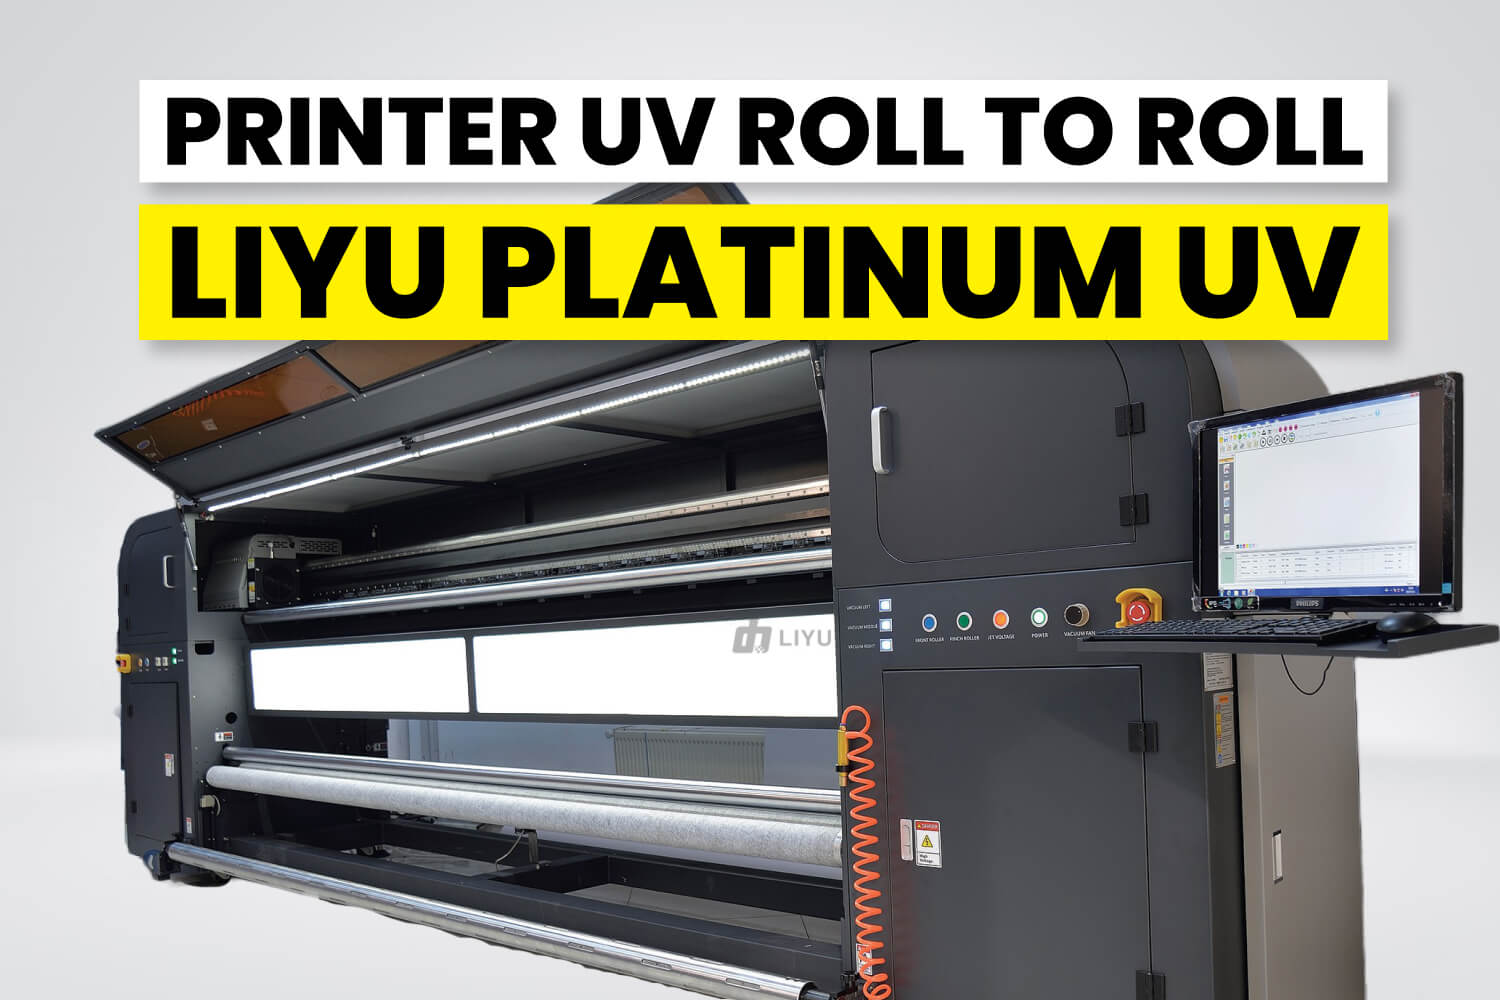 Printer Uv Roll To Roll Liyu Platinum Uv